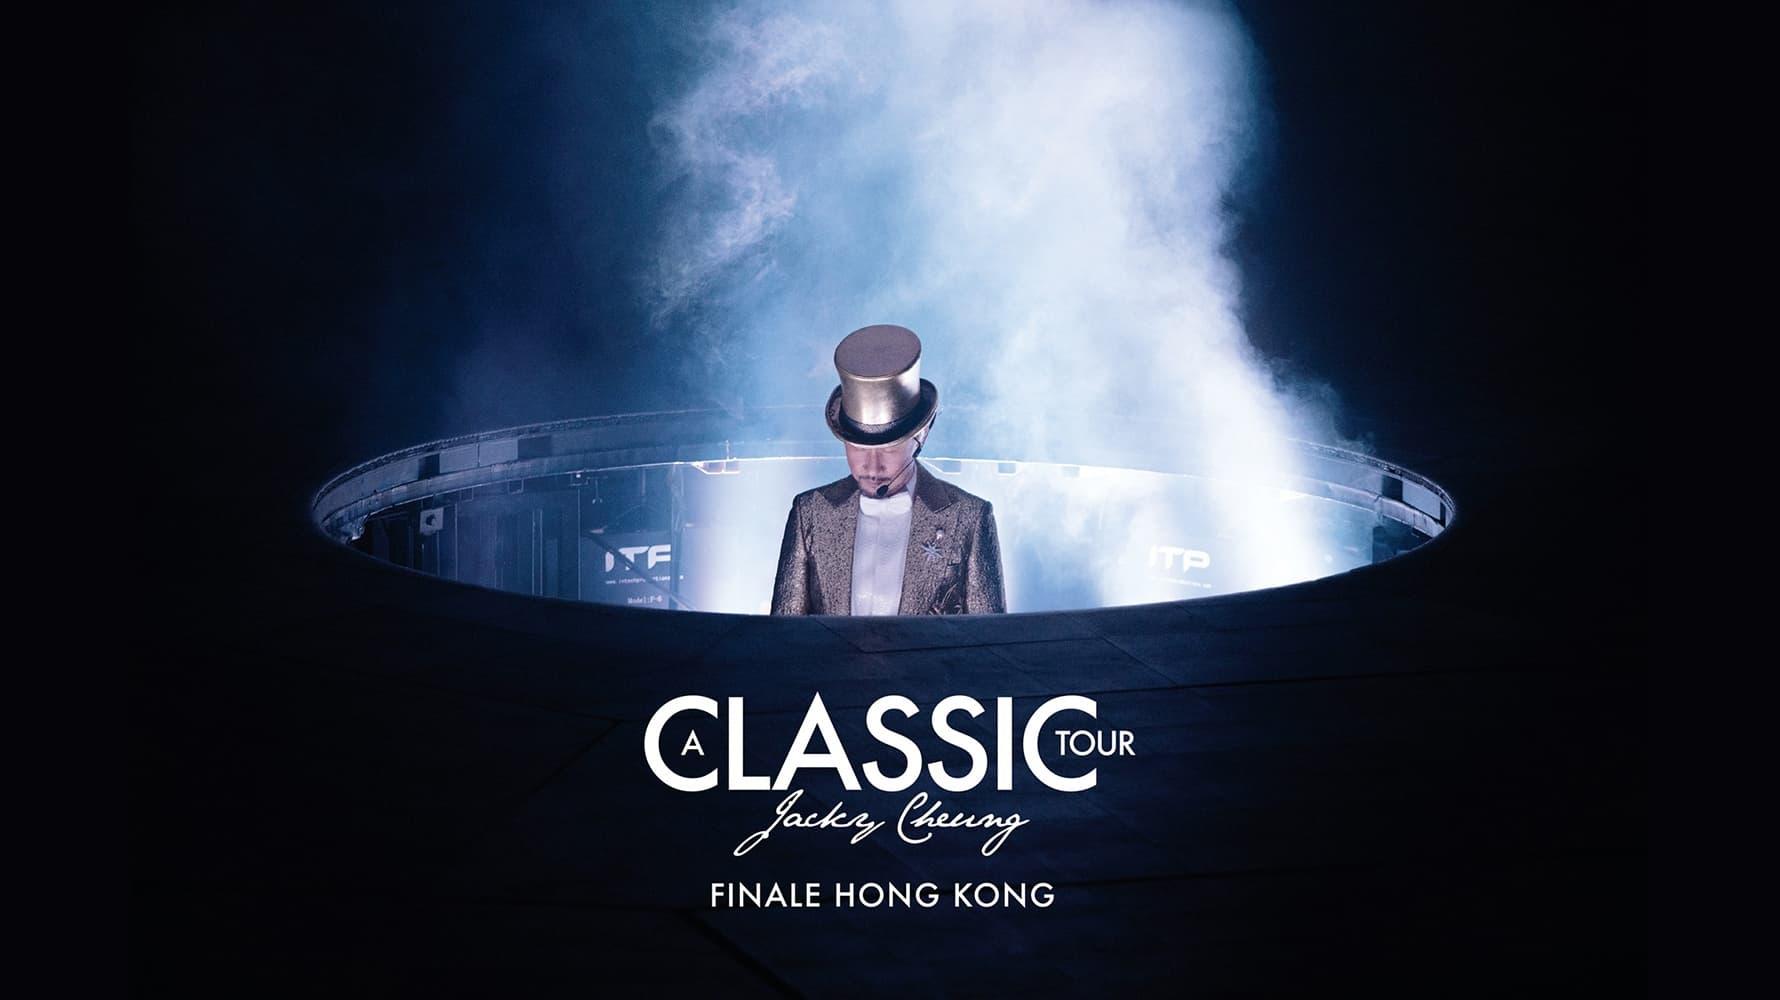 Jacky Cheung A Classic Tour Concert backdrop